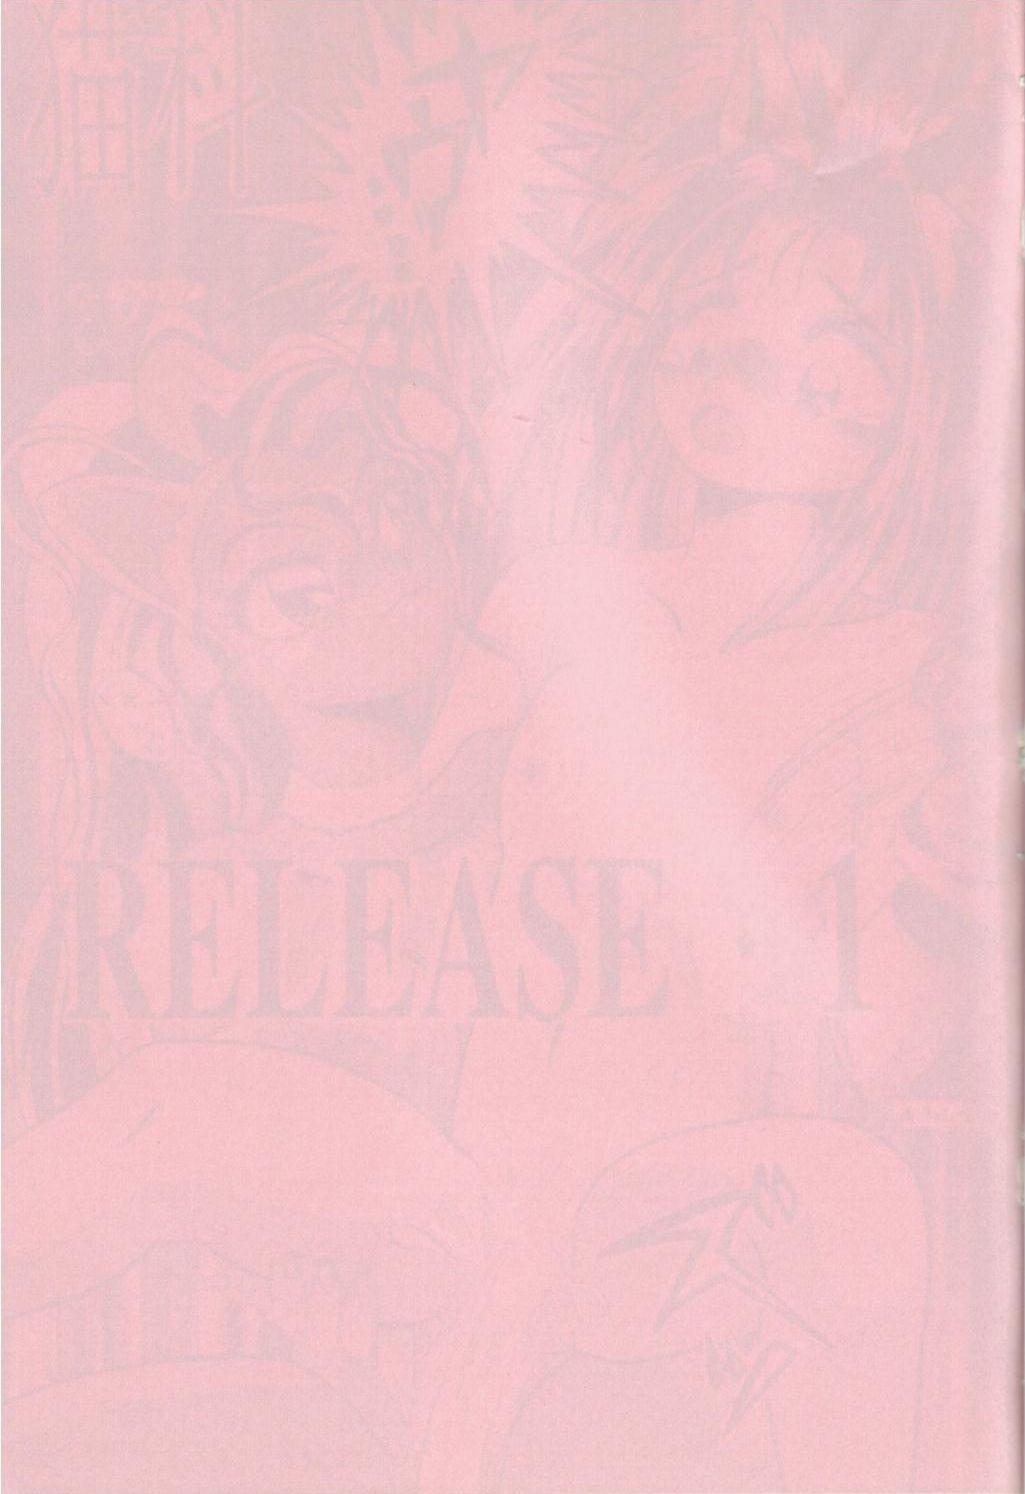 Smoking Release-1 - Ah my goddess Tenchi muyo Long Hair - Page 2